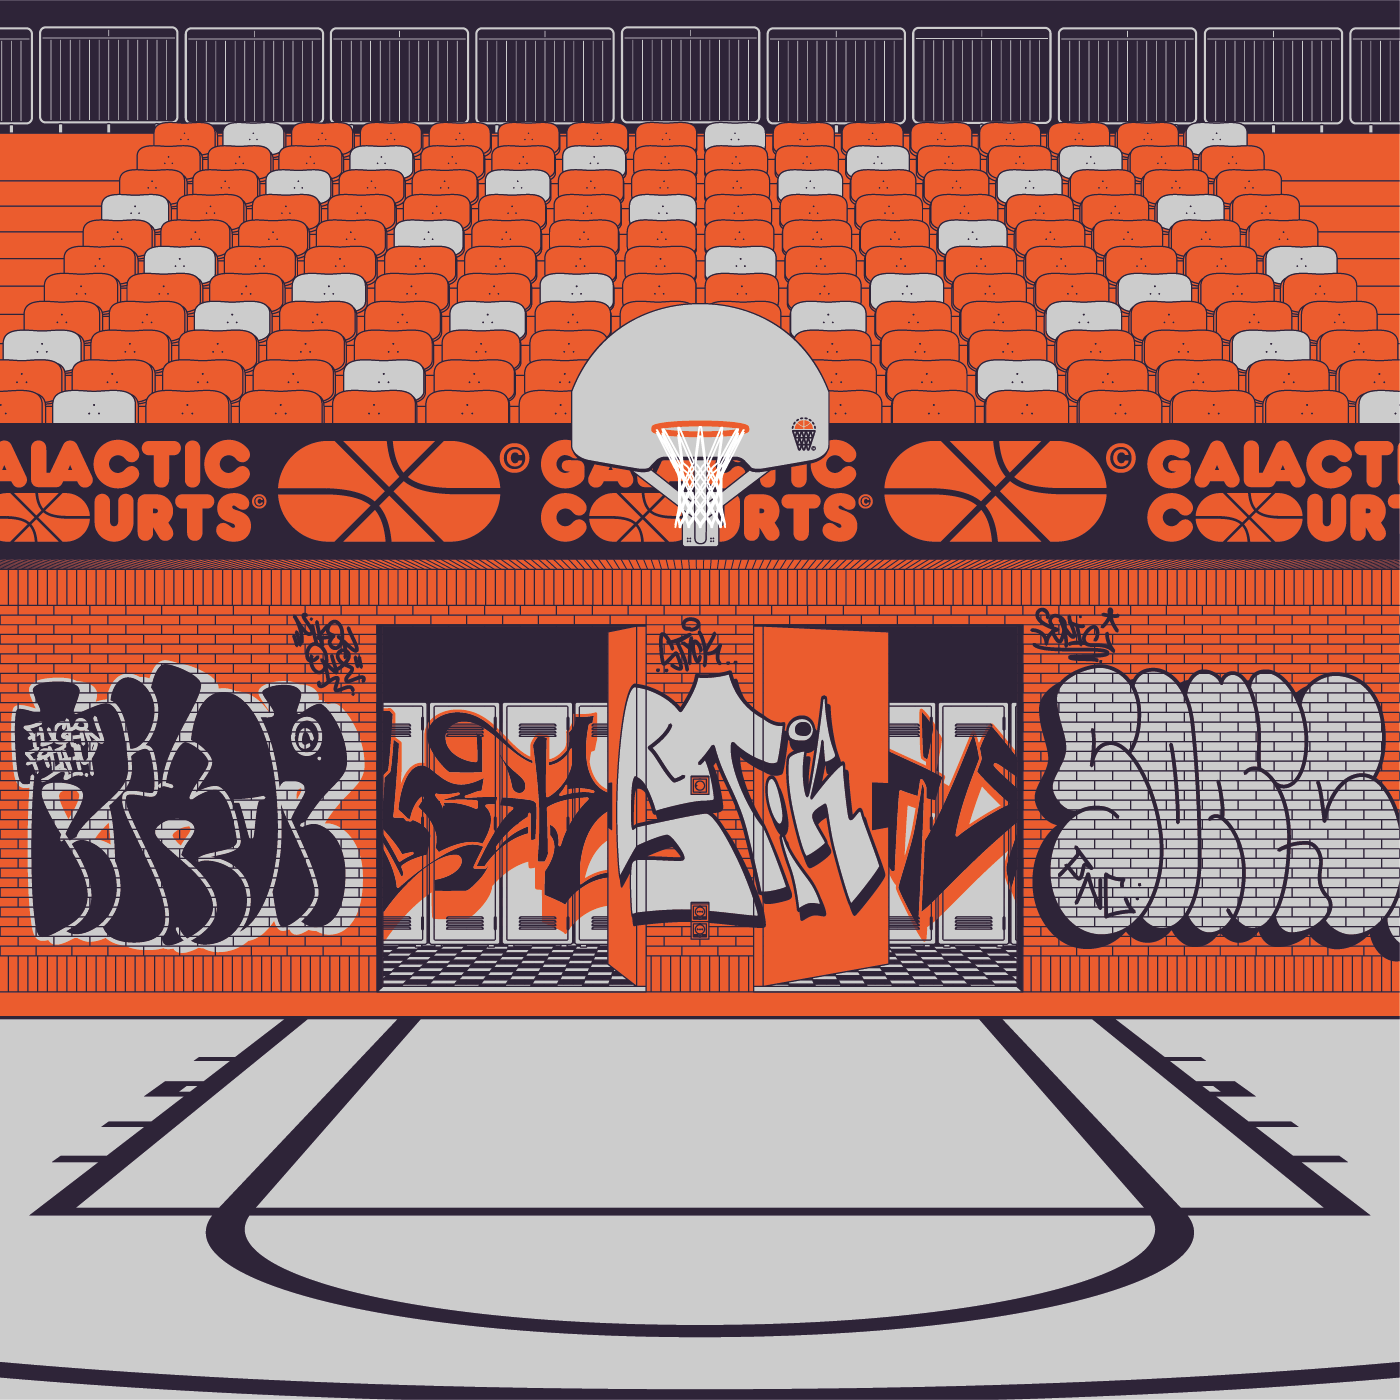 Backetbsll hoops basketball basketball art basketball design Exhibition  hungary ILLUSTRATION  print design  Graffiti Street Art 